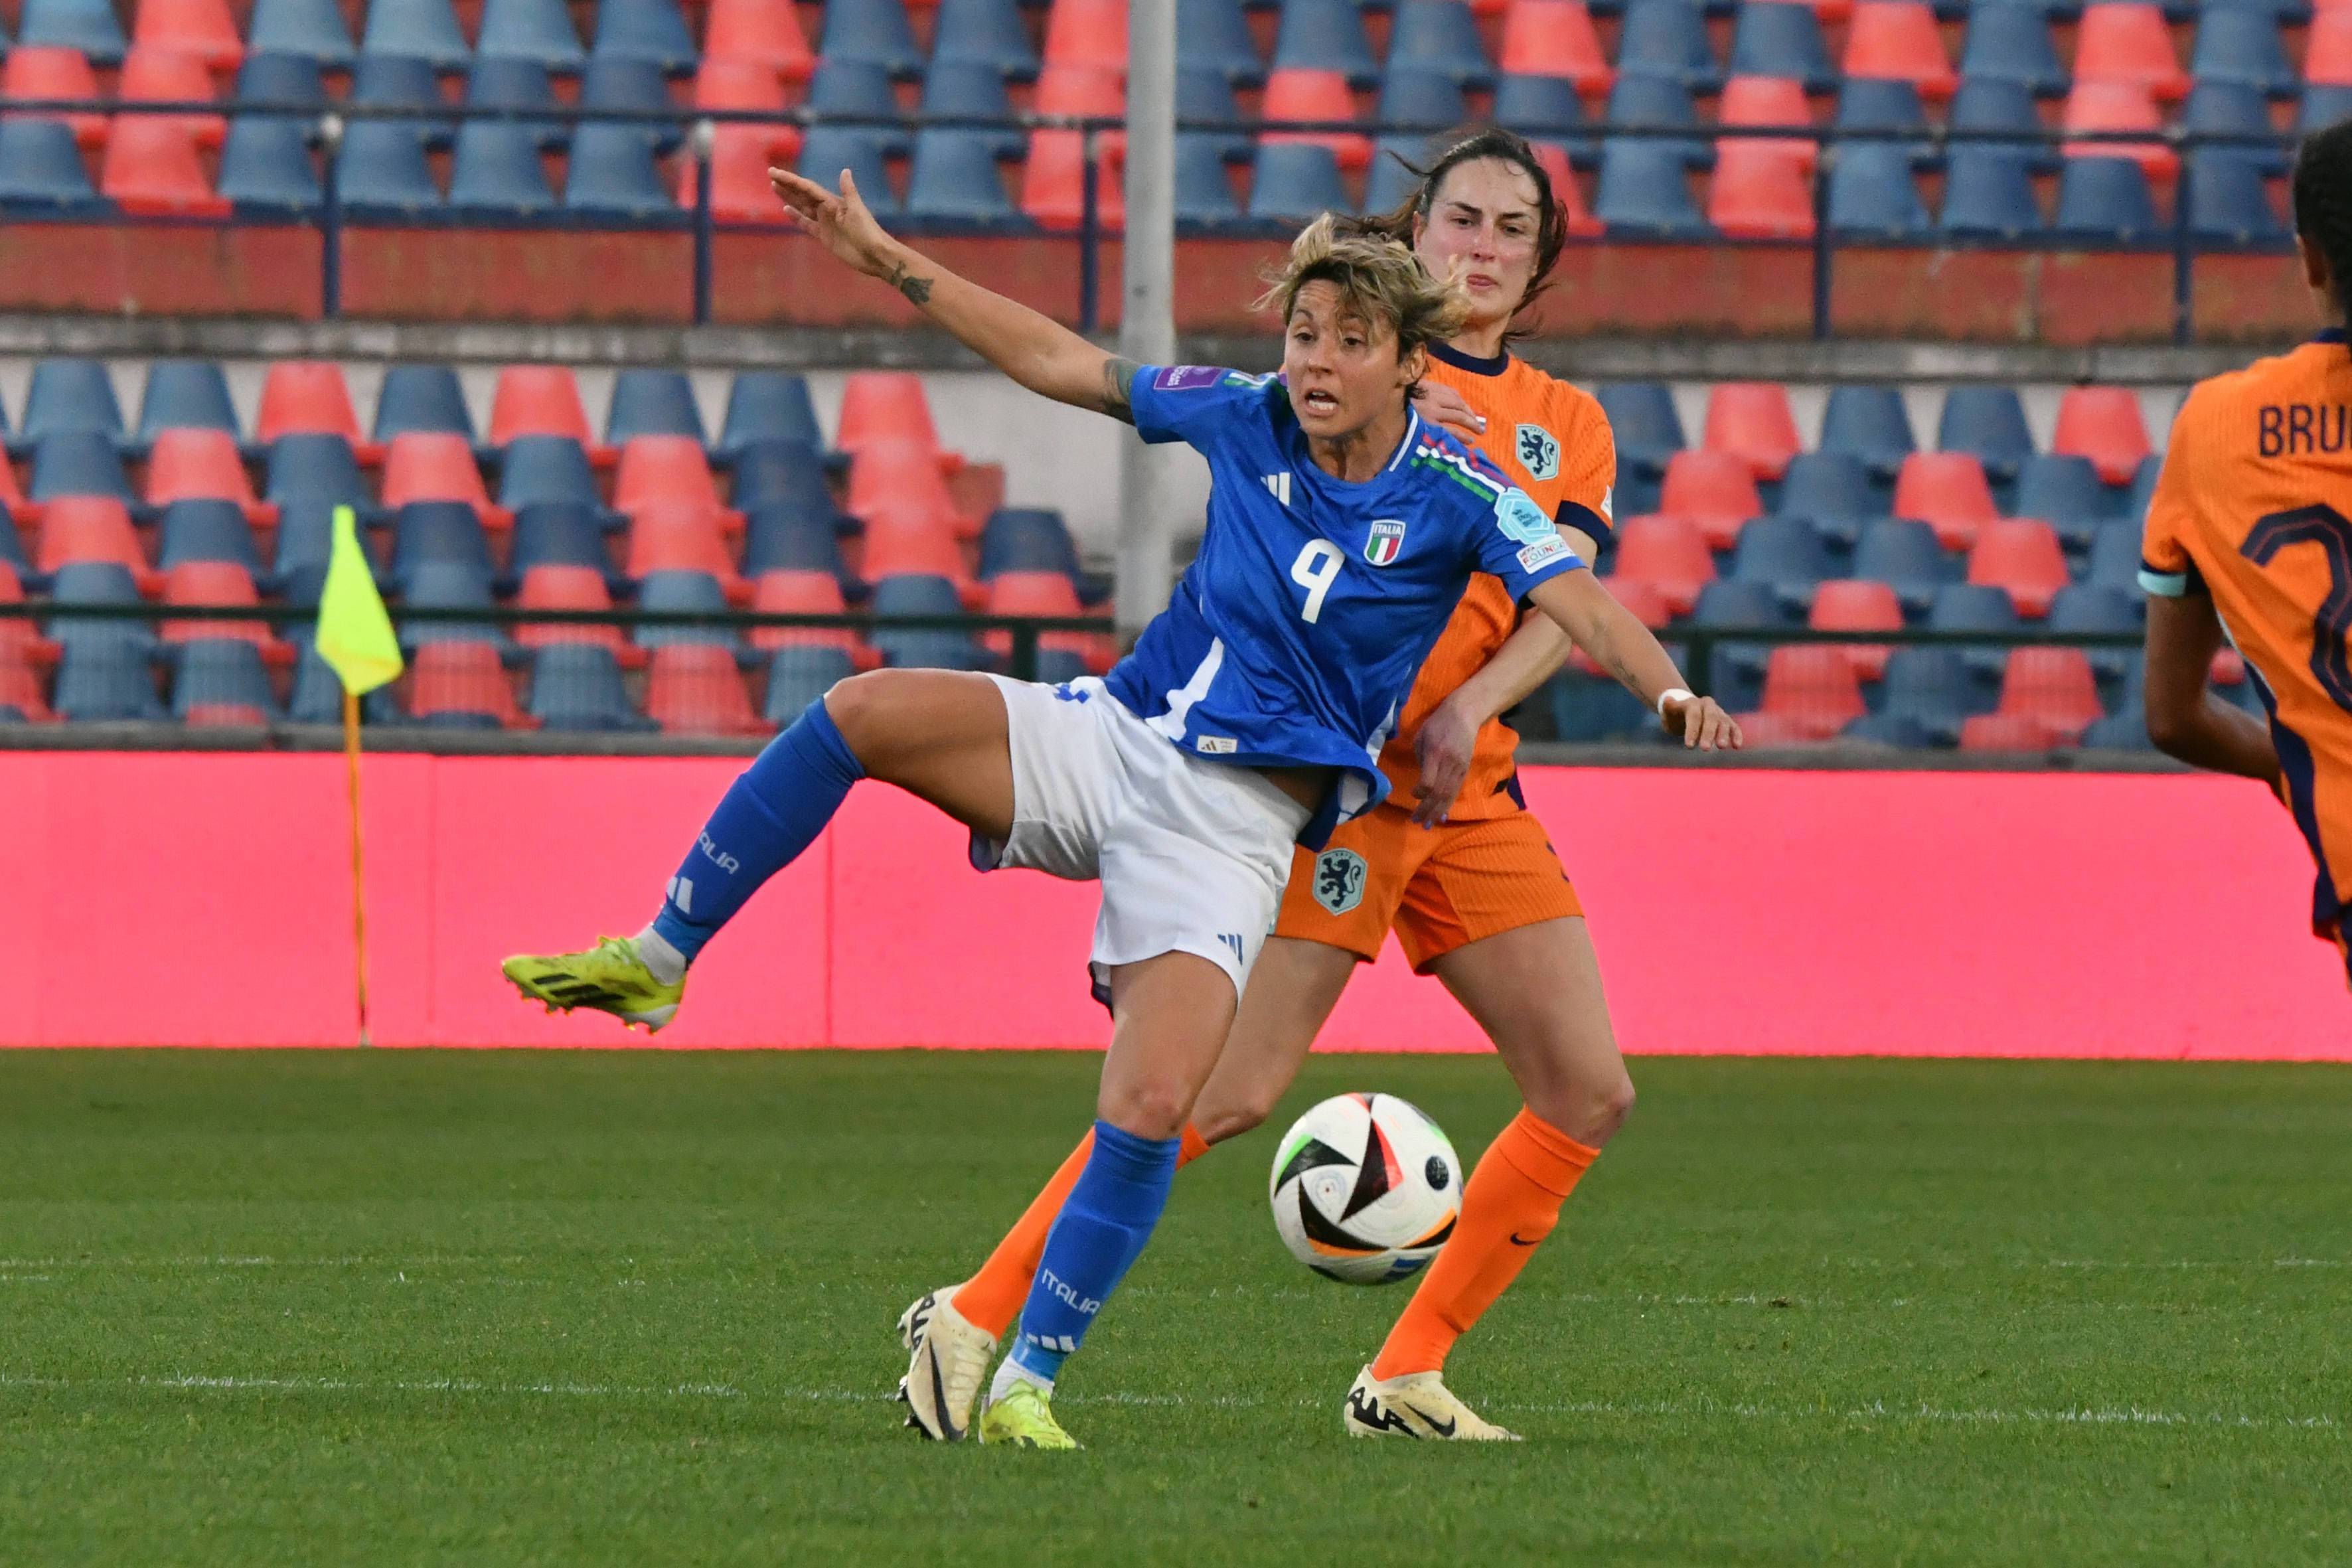 Oranjeleeuwinnen beginnen EK-kwalificatie met misstap in Italië